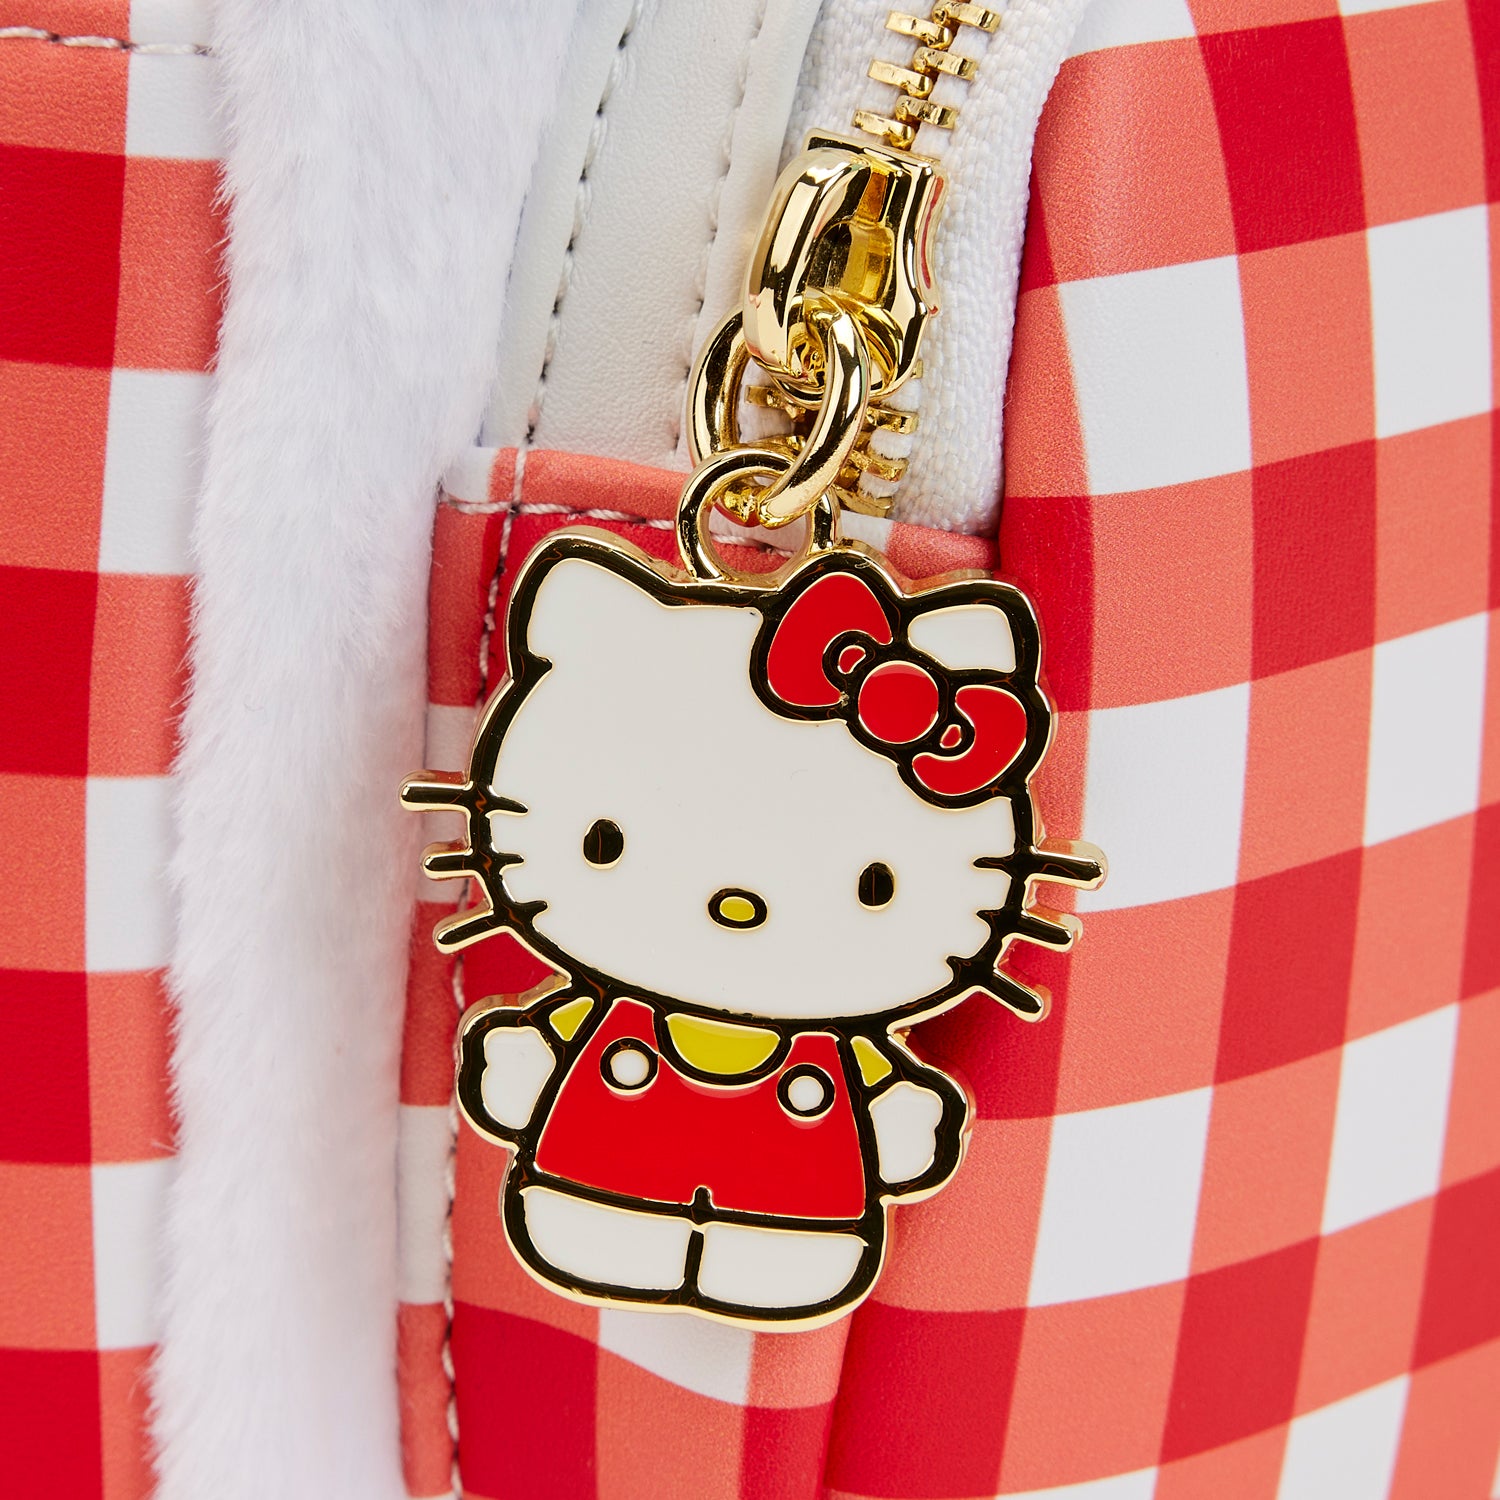 Hello Kitty Backpack -  Canada